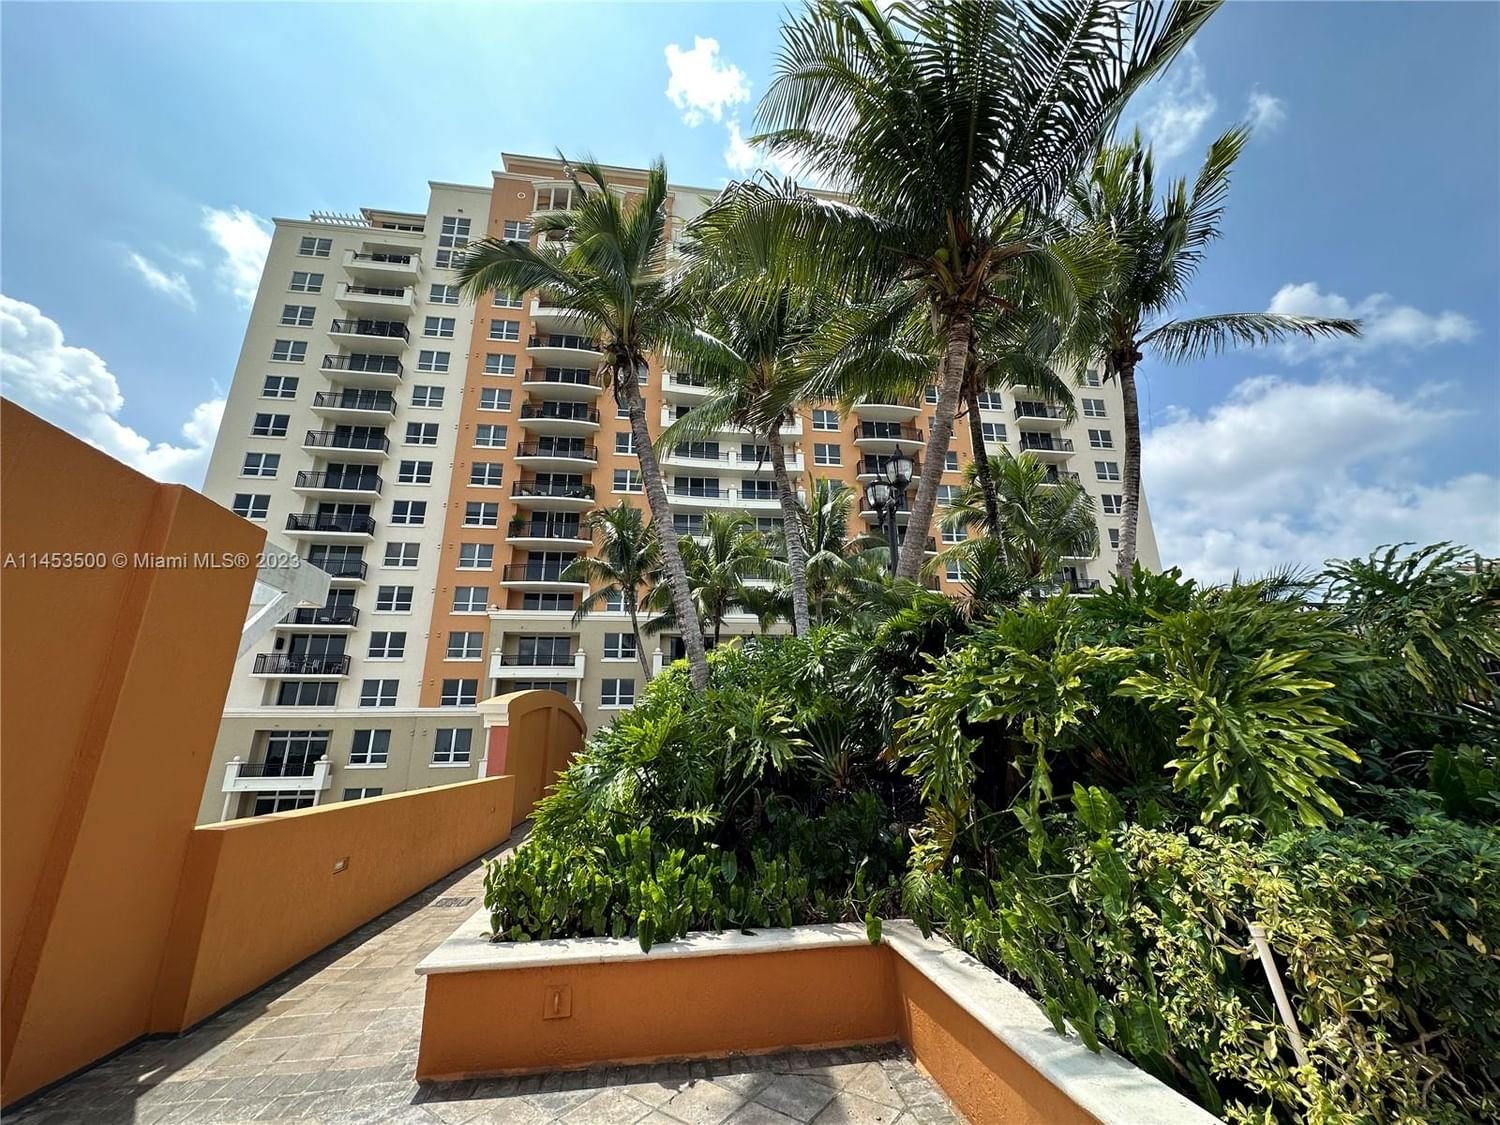 Real estate property located at 3232 Coral Way #804, Miami-Dade County, Miami, FL